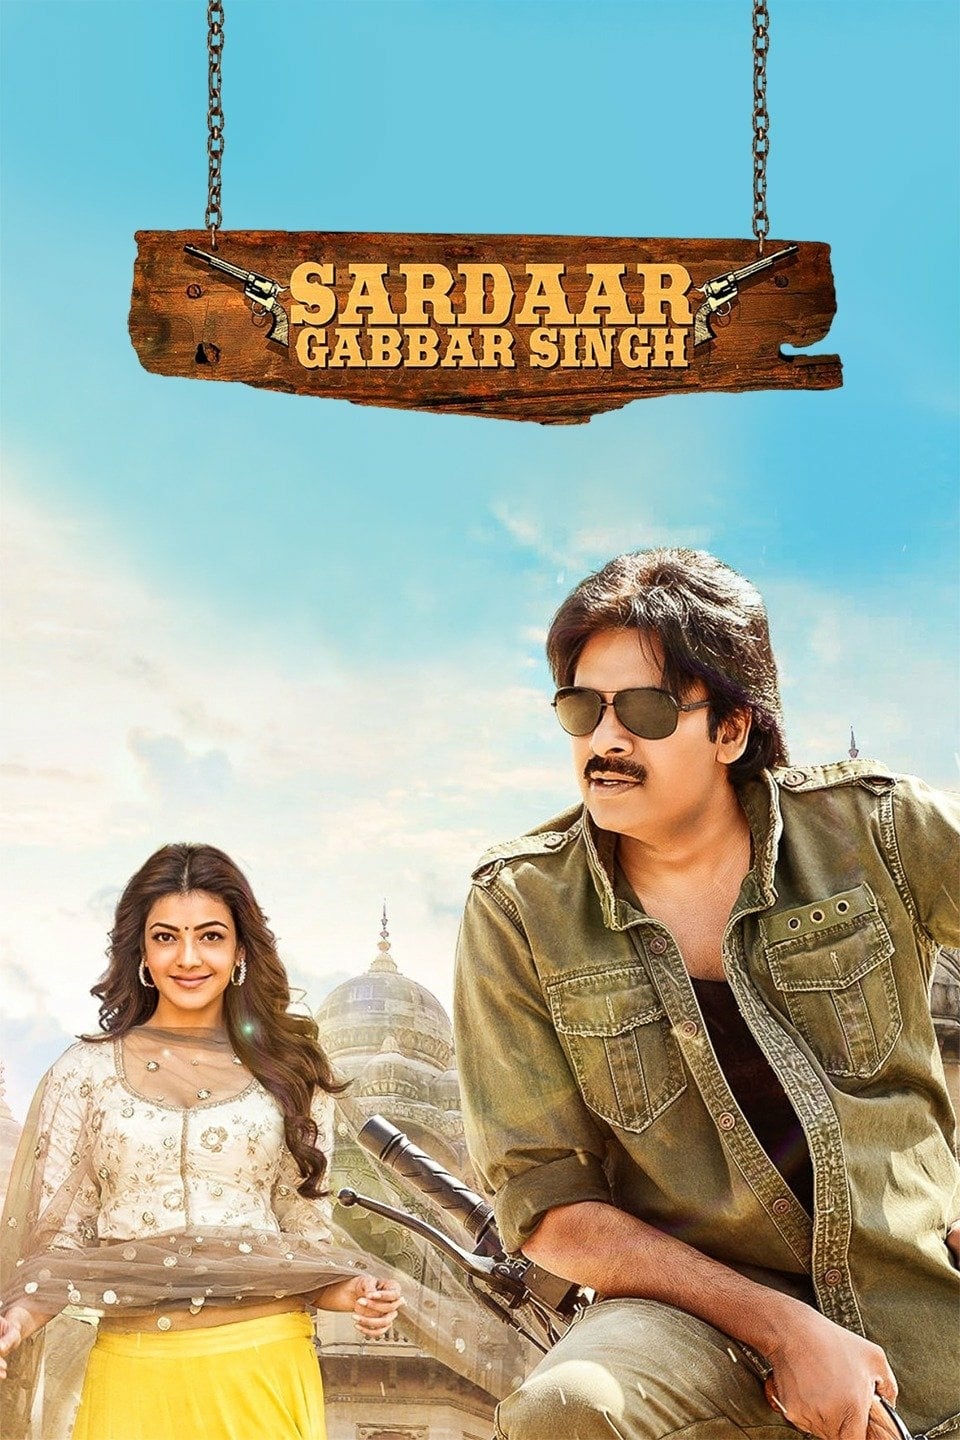 Poster for the movie "Sardaar Gabbar Singh"